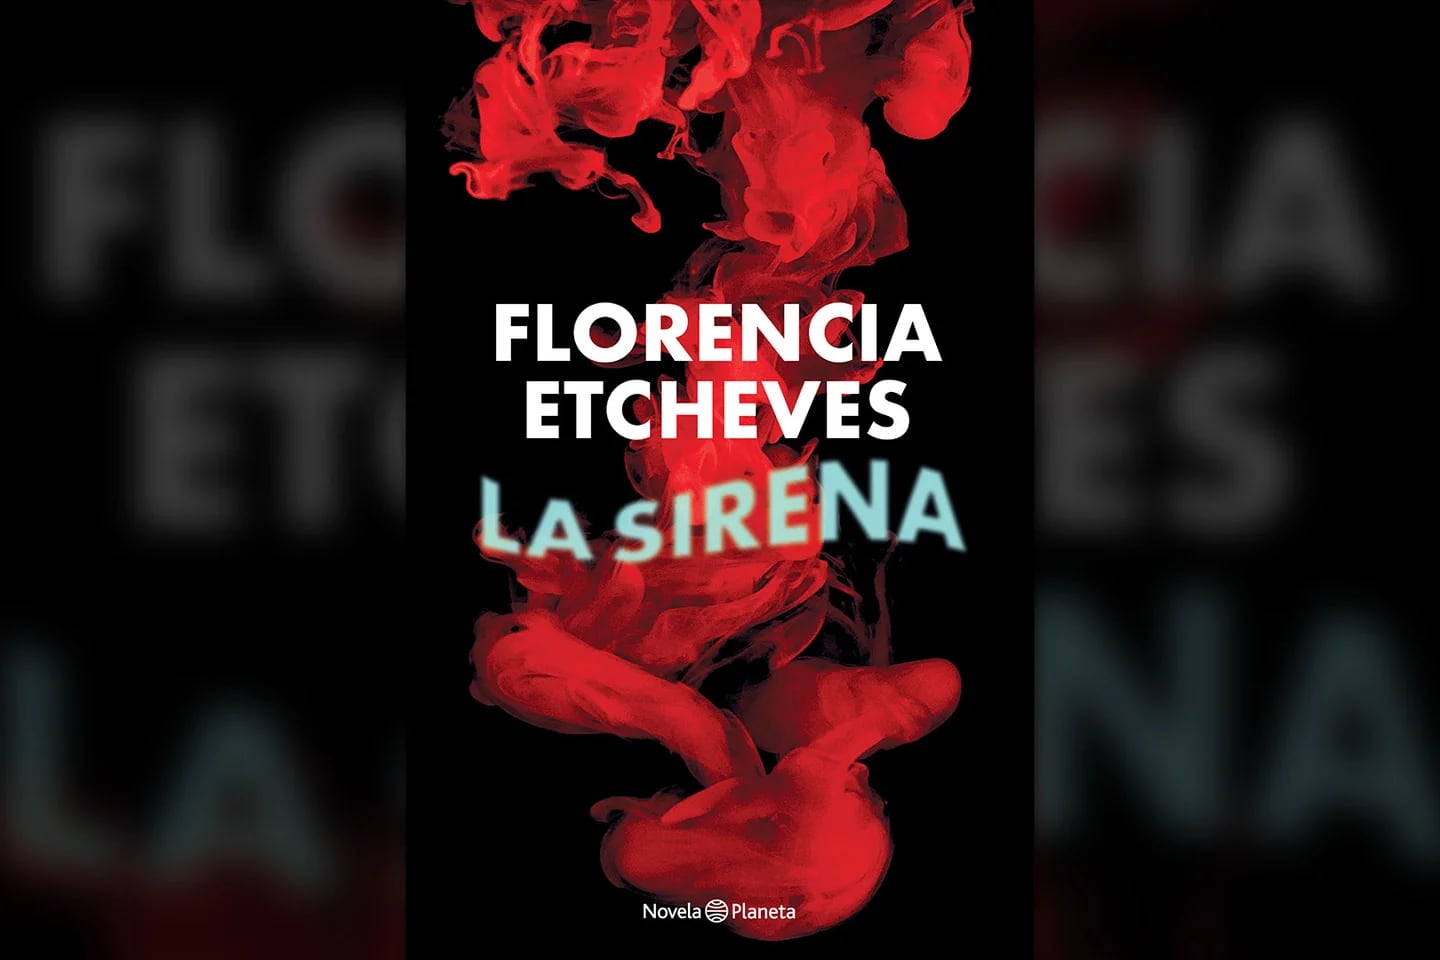 La sirena by Florencia Etcheves